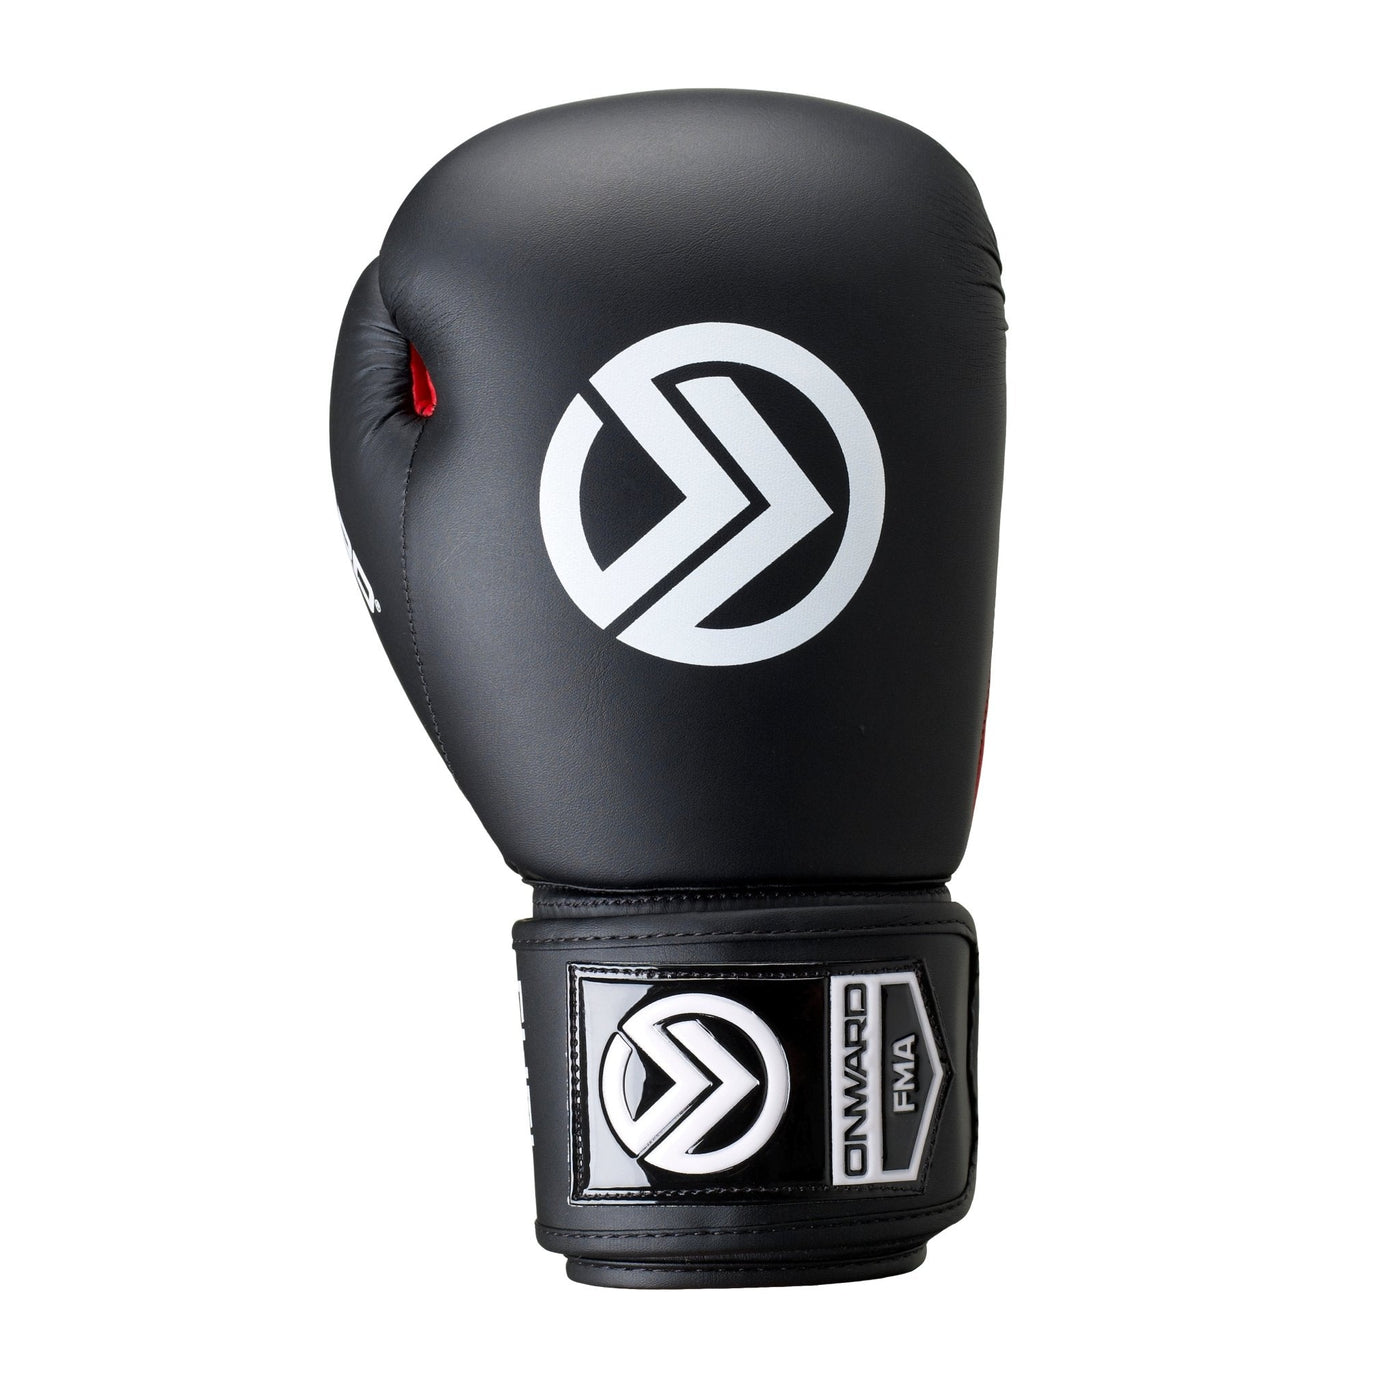 Fuel Boxing Glove - Onward Online - 2AA007-089-10OZ